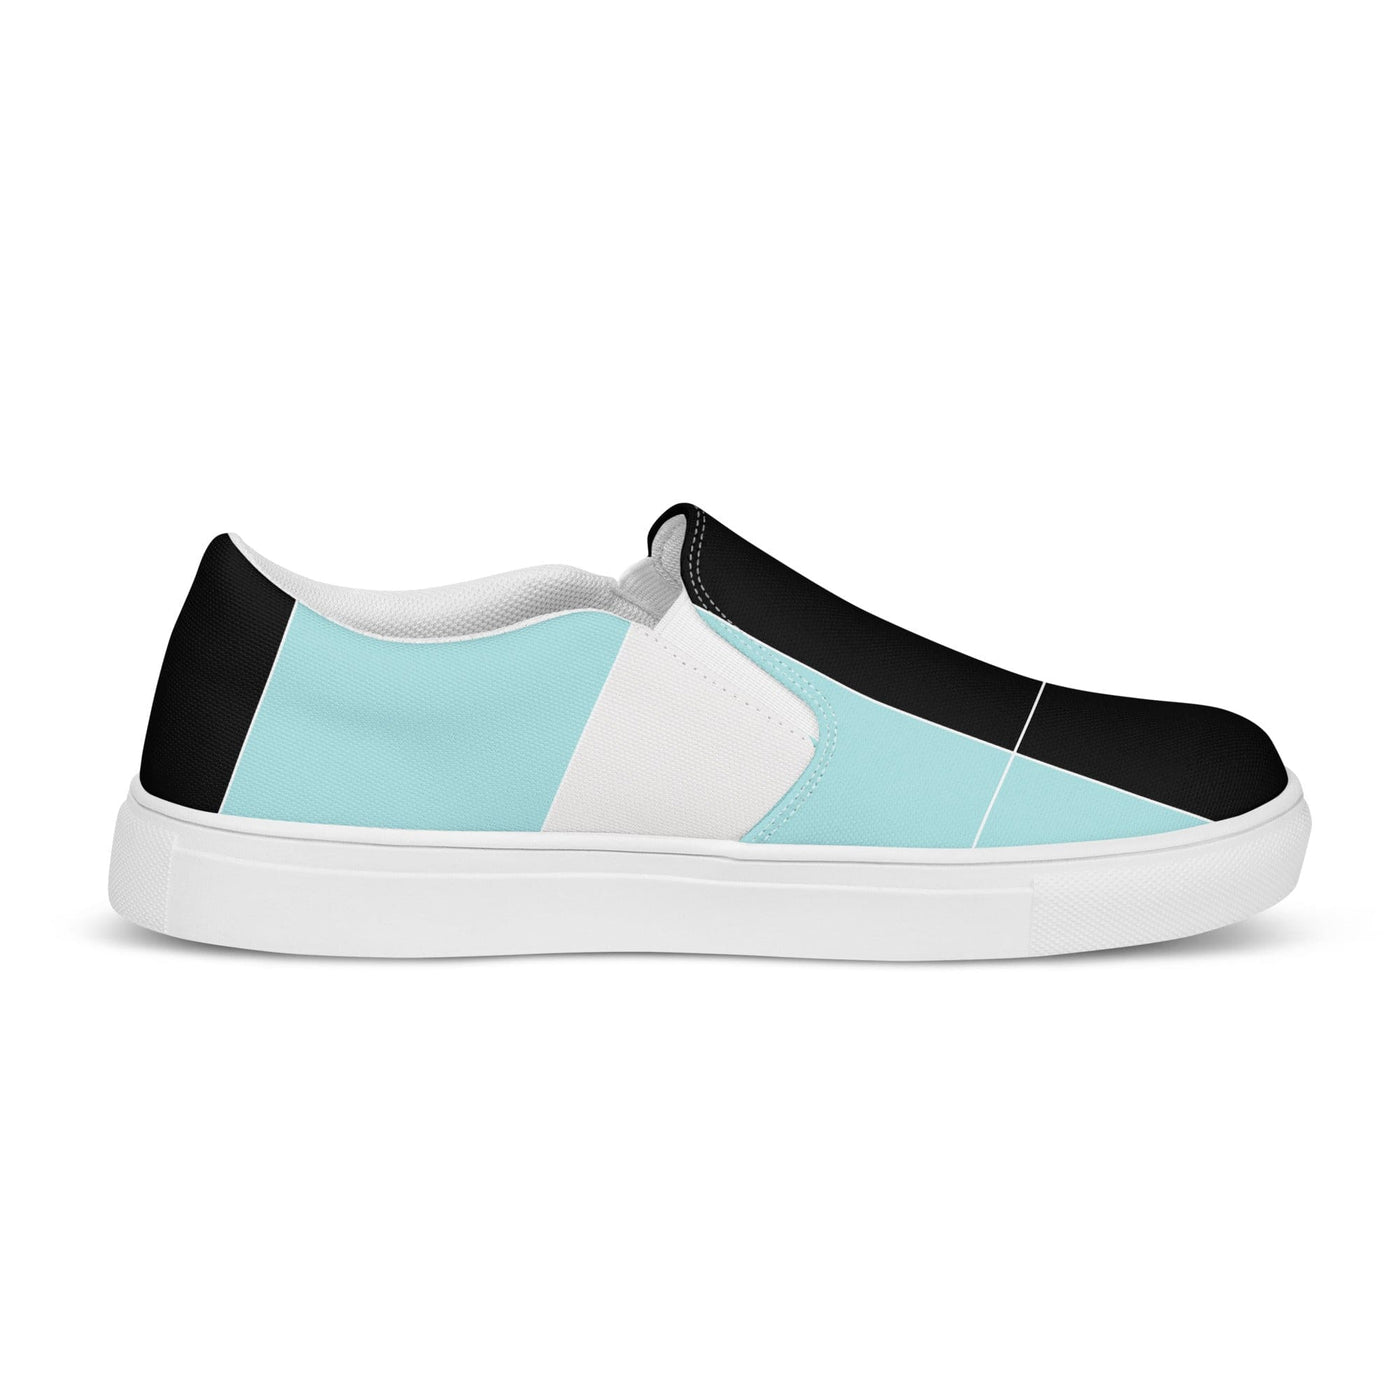 Women’s Slip-on Canvas Shoes Pastel Colorblock Pink/black/blue - Womens